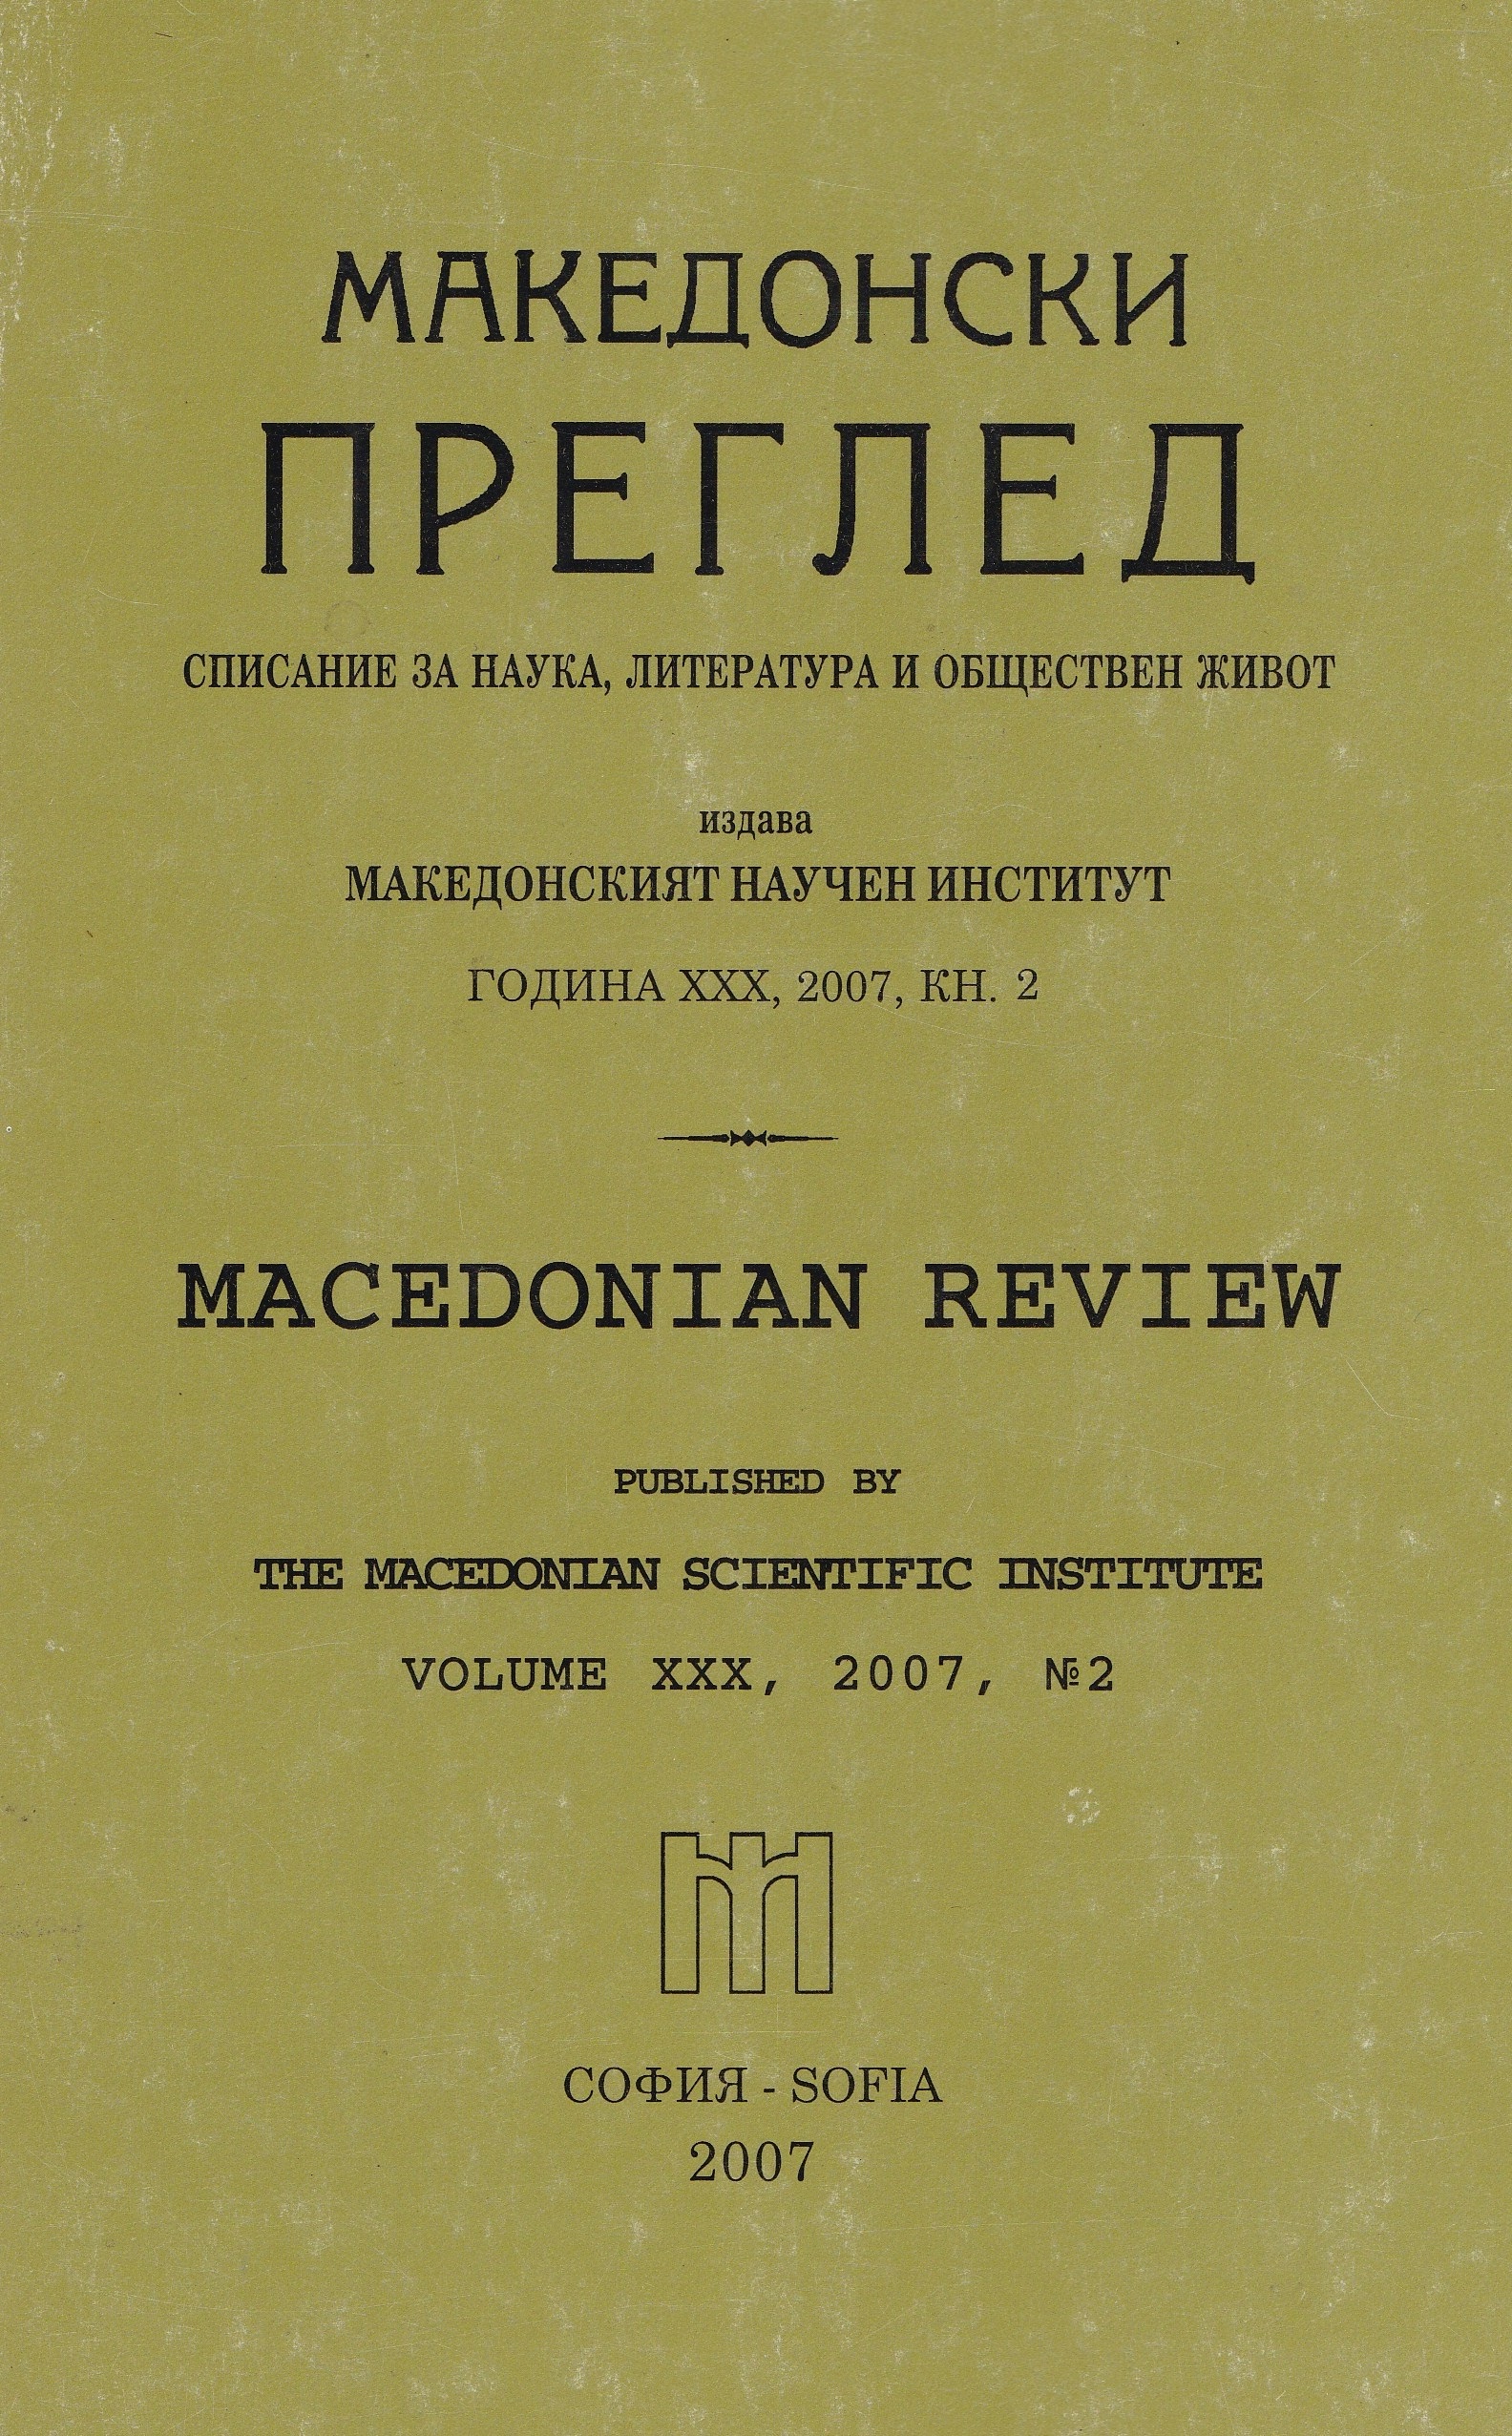 Marko Tsepenkov. Folklore heritage, Vol.1, Sofia, 1998, 511 p; vol.2, Sofia, 2001, 530 p; vol.3, Sofia, 2001, 530 p, vol.4, Sofia, 2006,426 p Cover Image